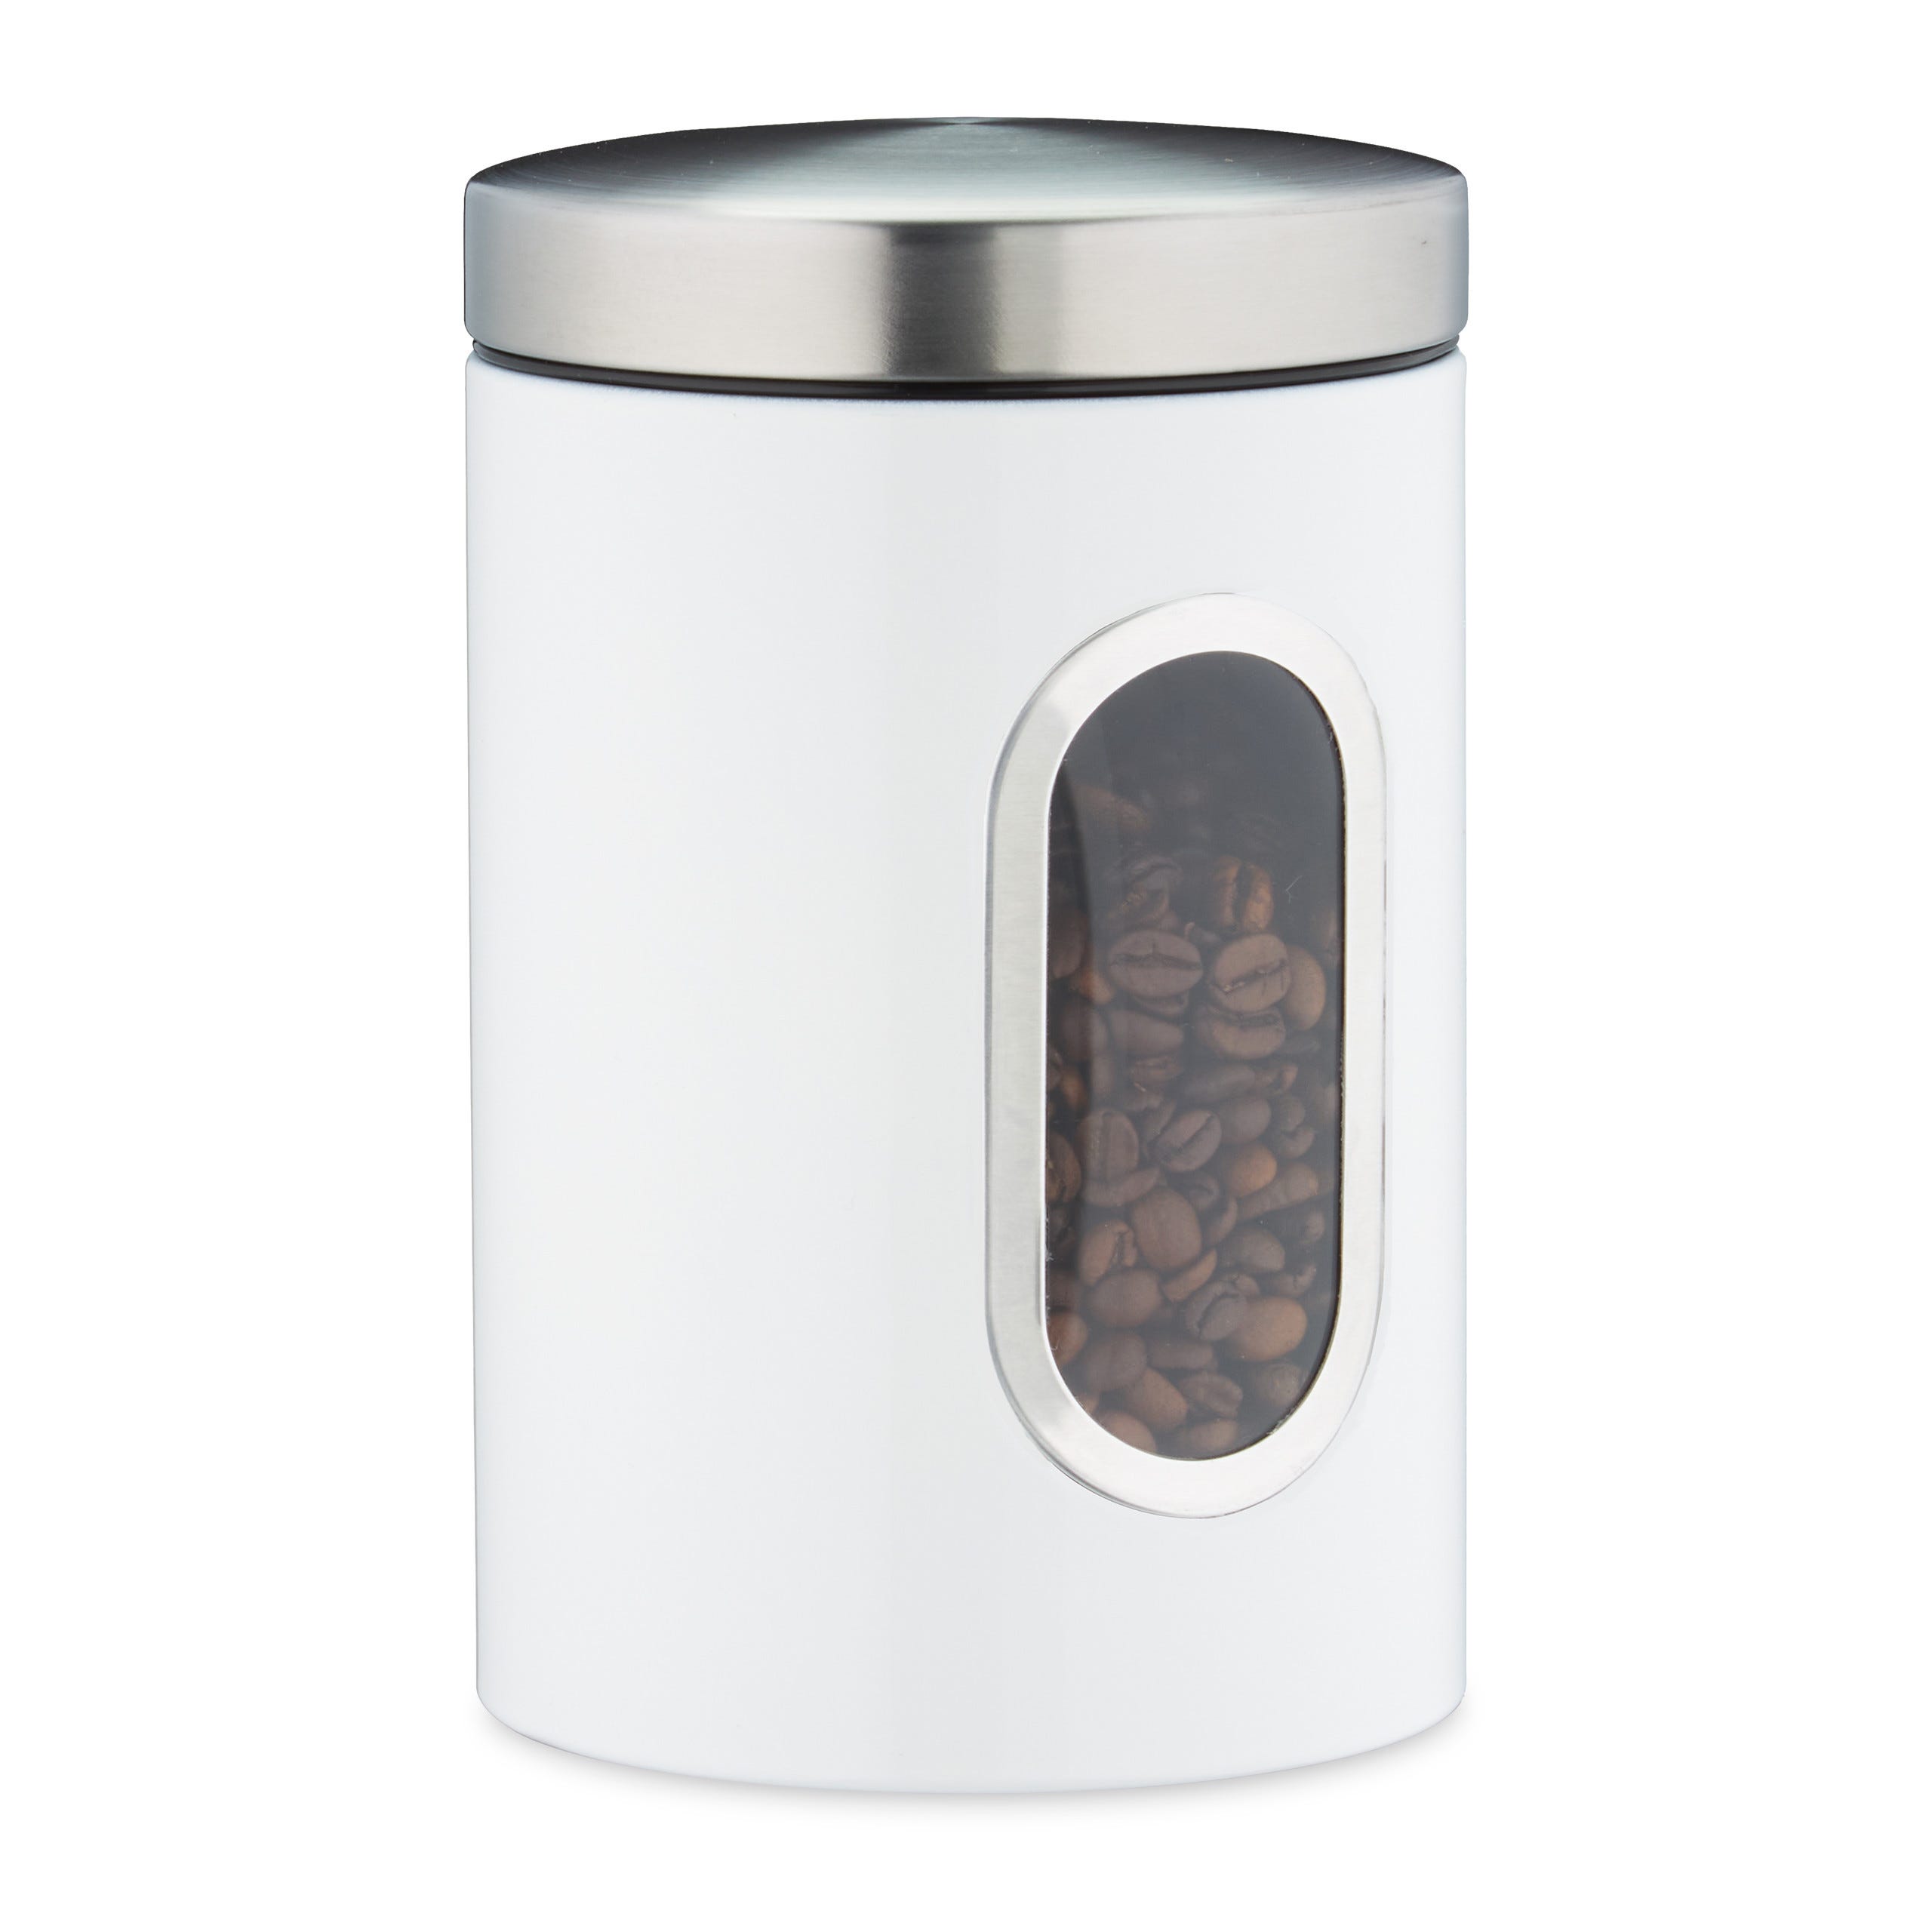 Avis de rappel de boîtes de café en grains de 250 gr de marque